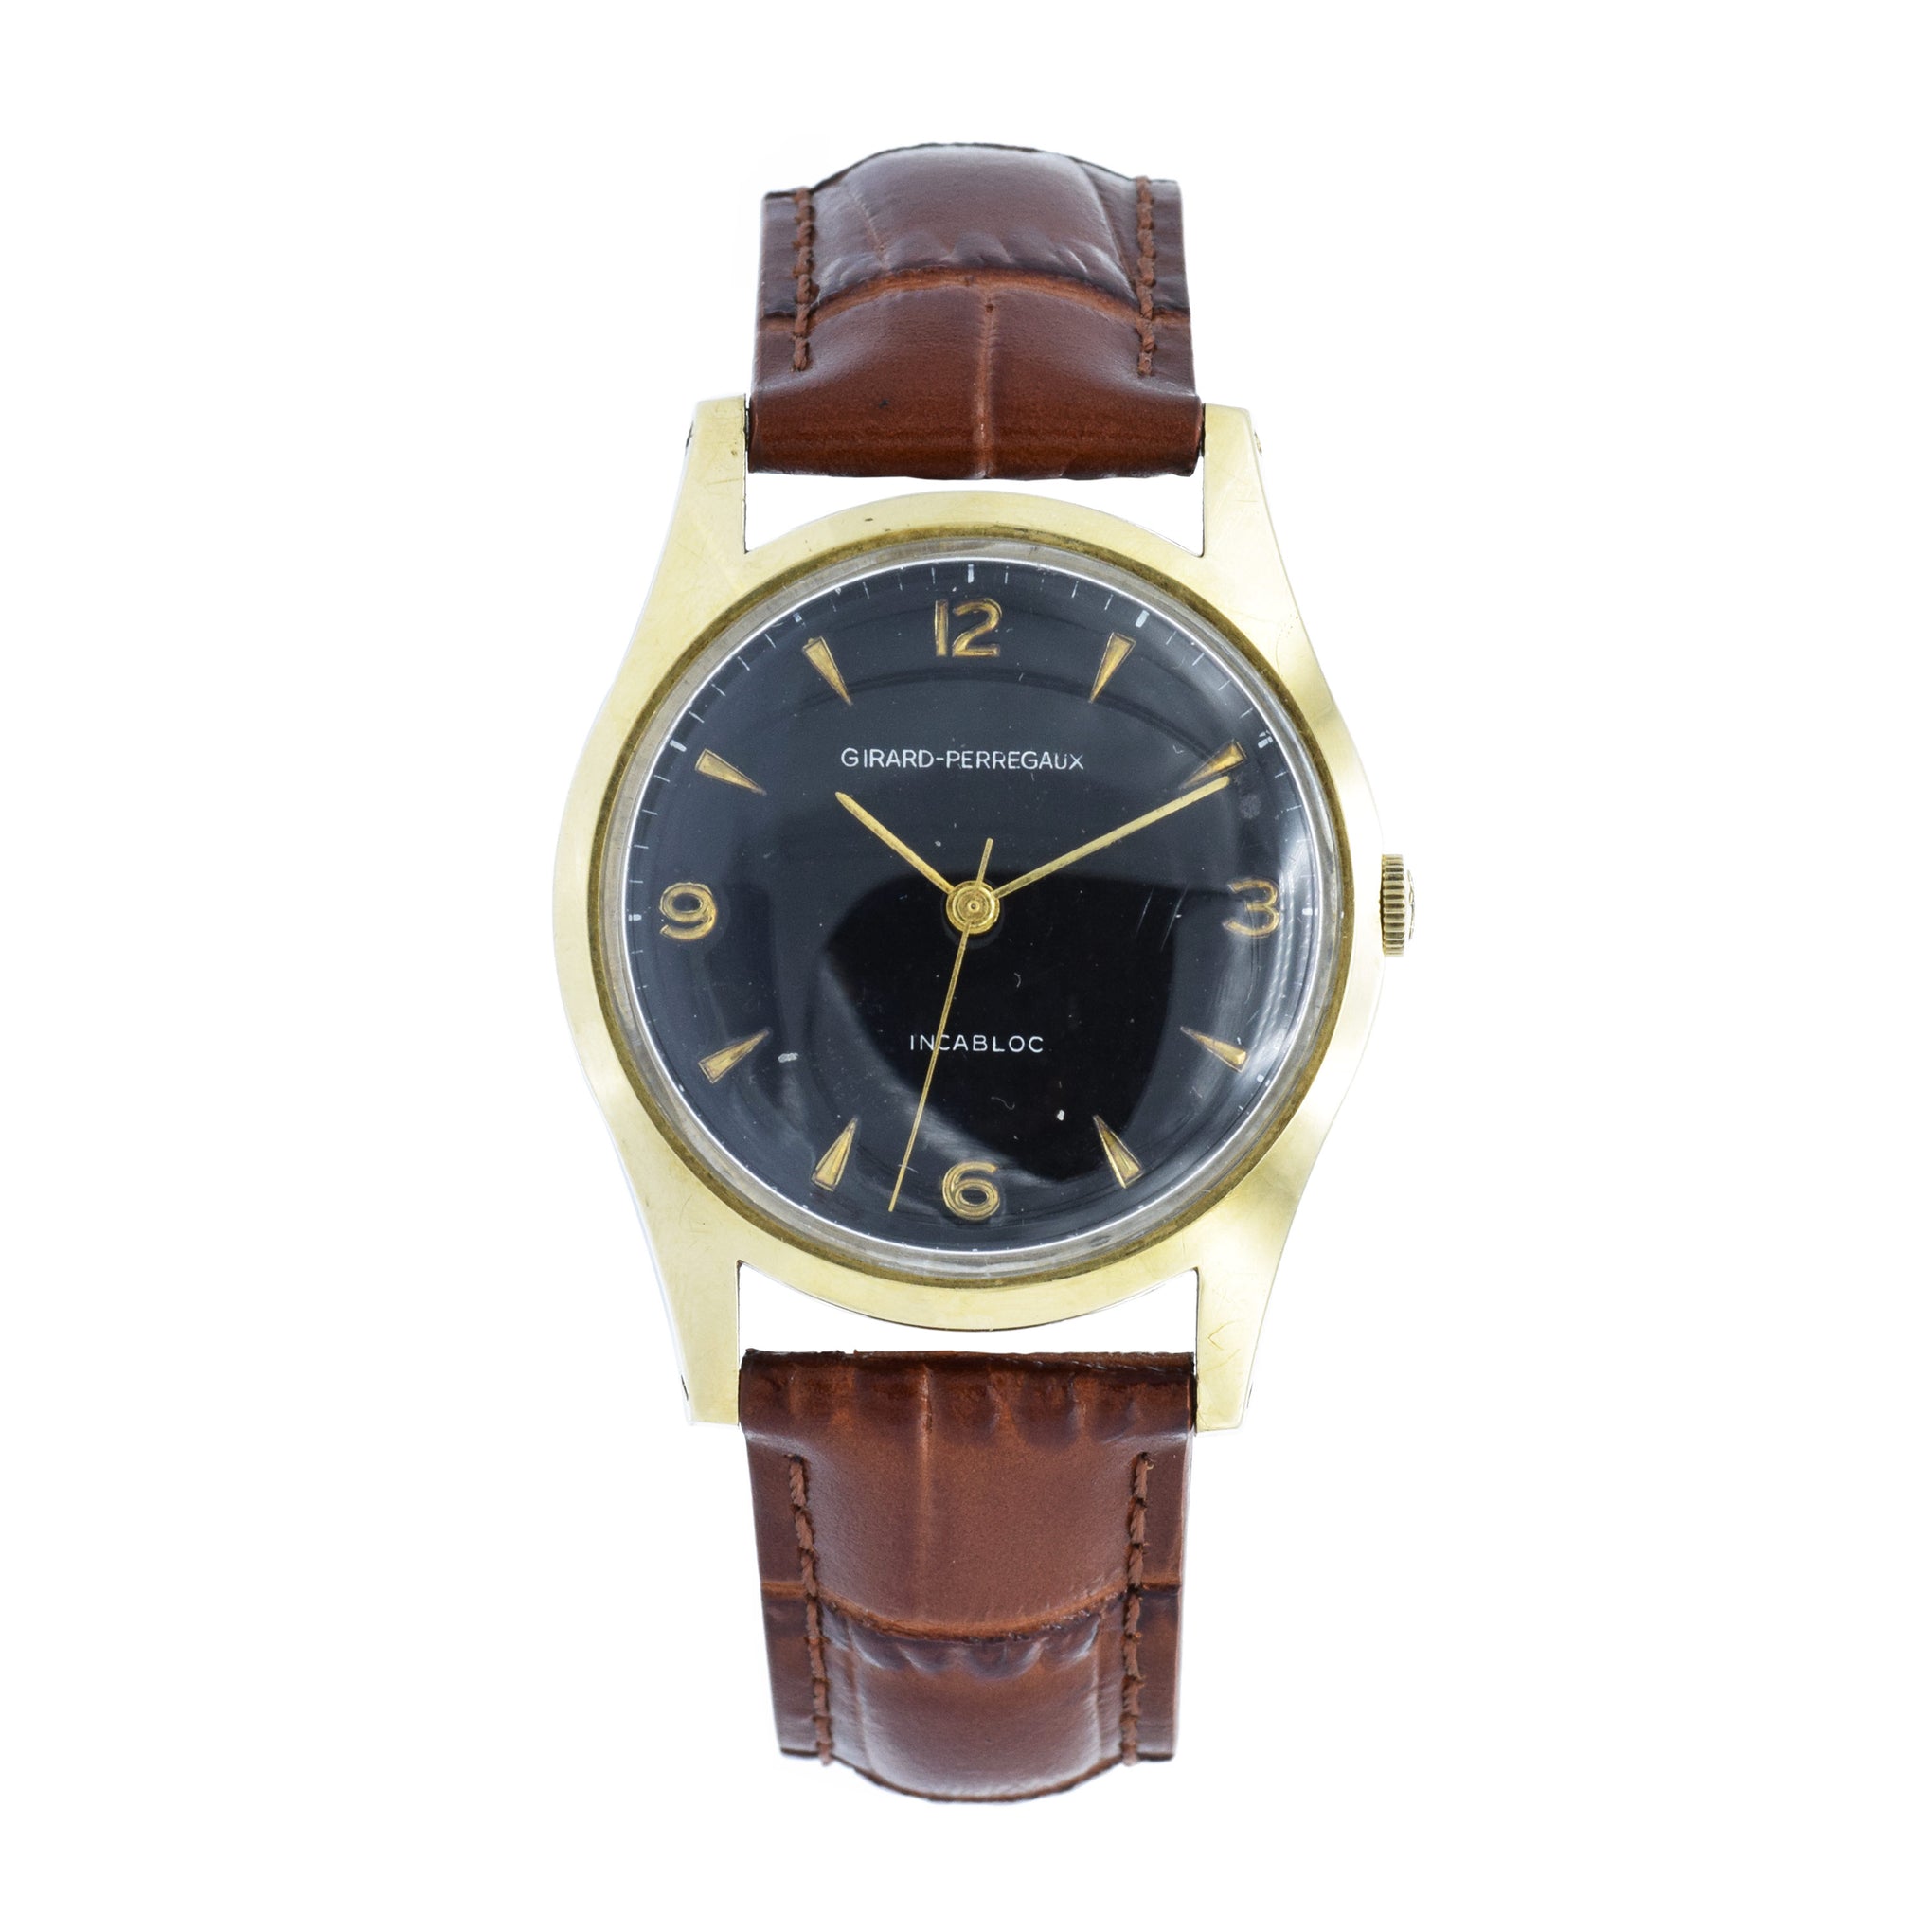 Vintage Girard-Perregaux Watch, 1960s